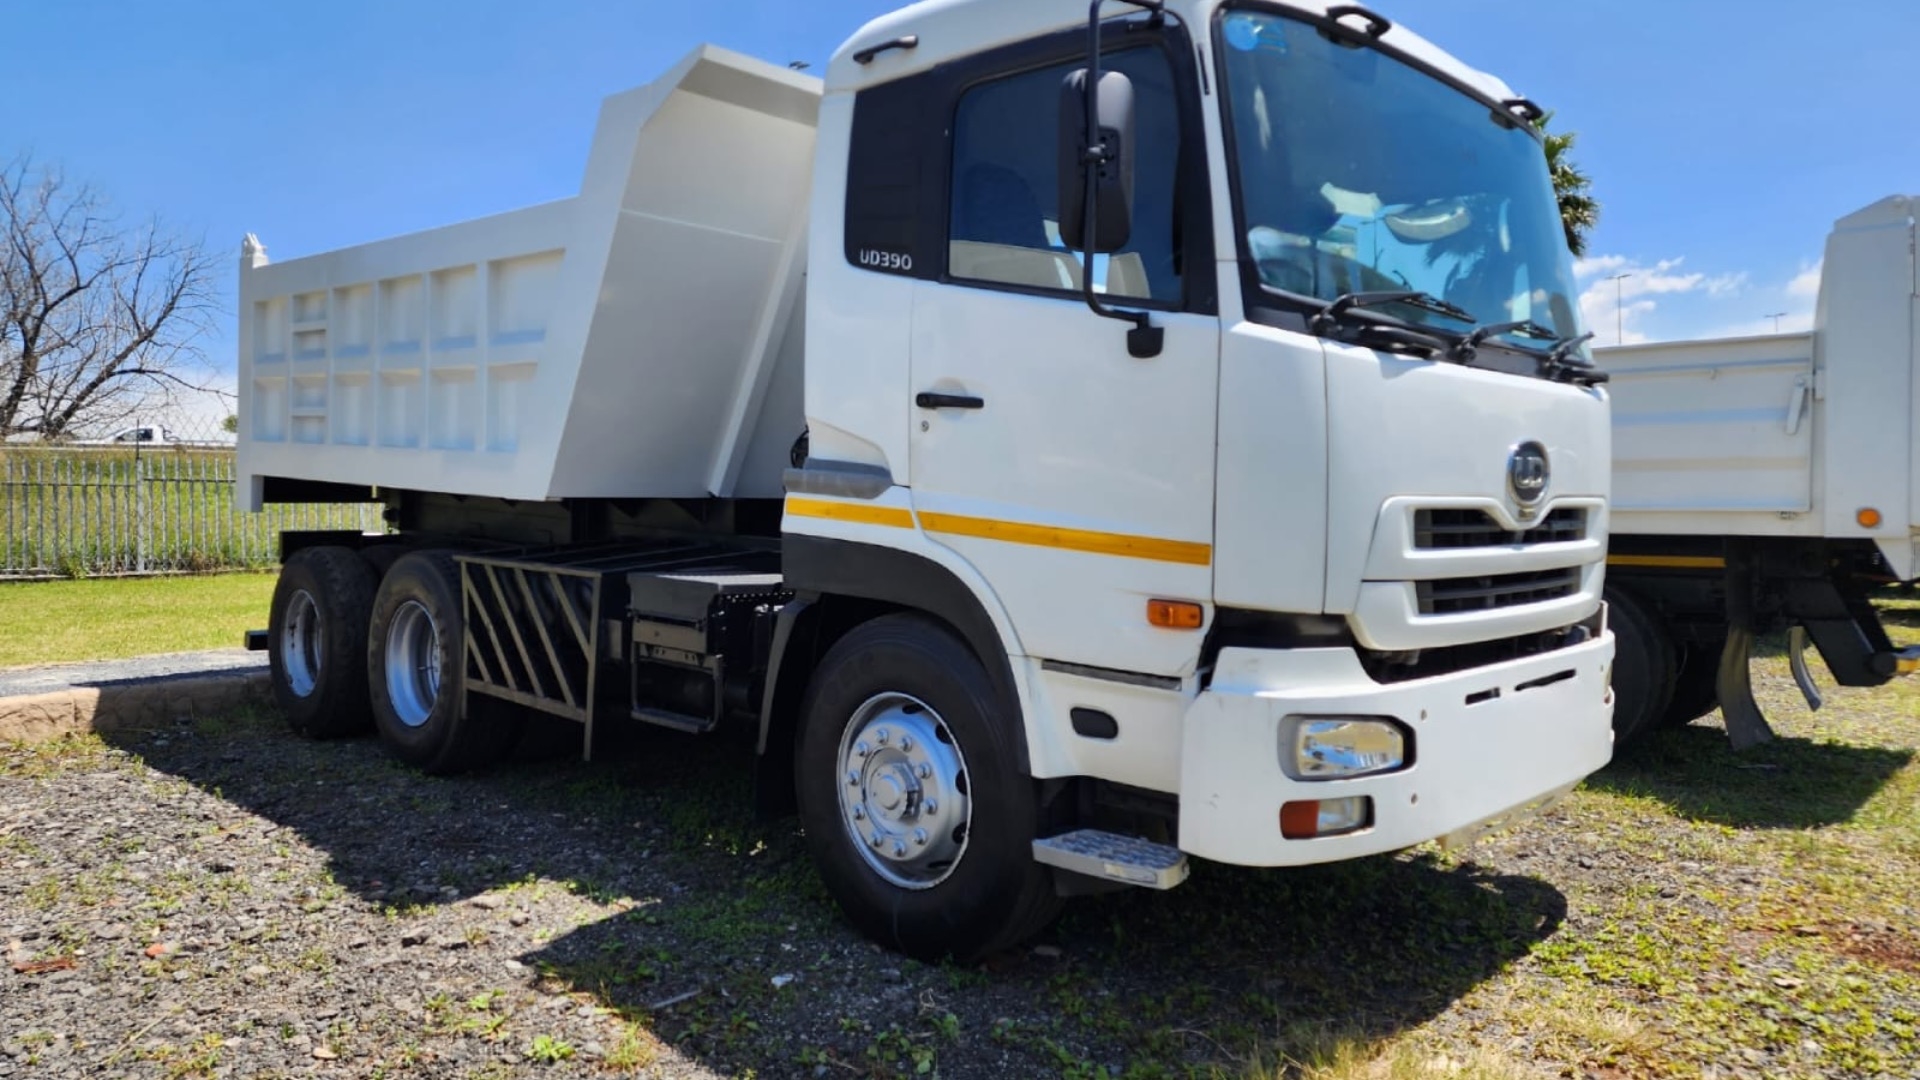 2008 Nissan Nissan UD390 10 Cube Tipper Tipper trucks for sale in Gauteng |  R 665,000 on Agrimag